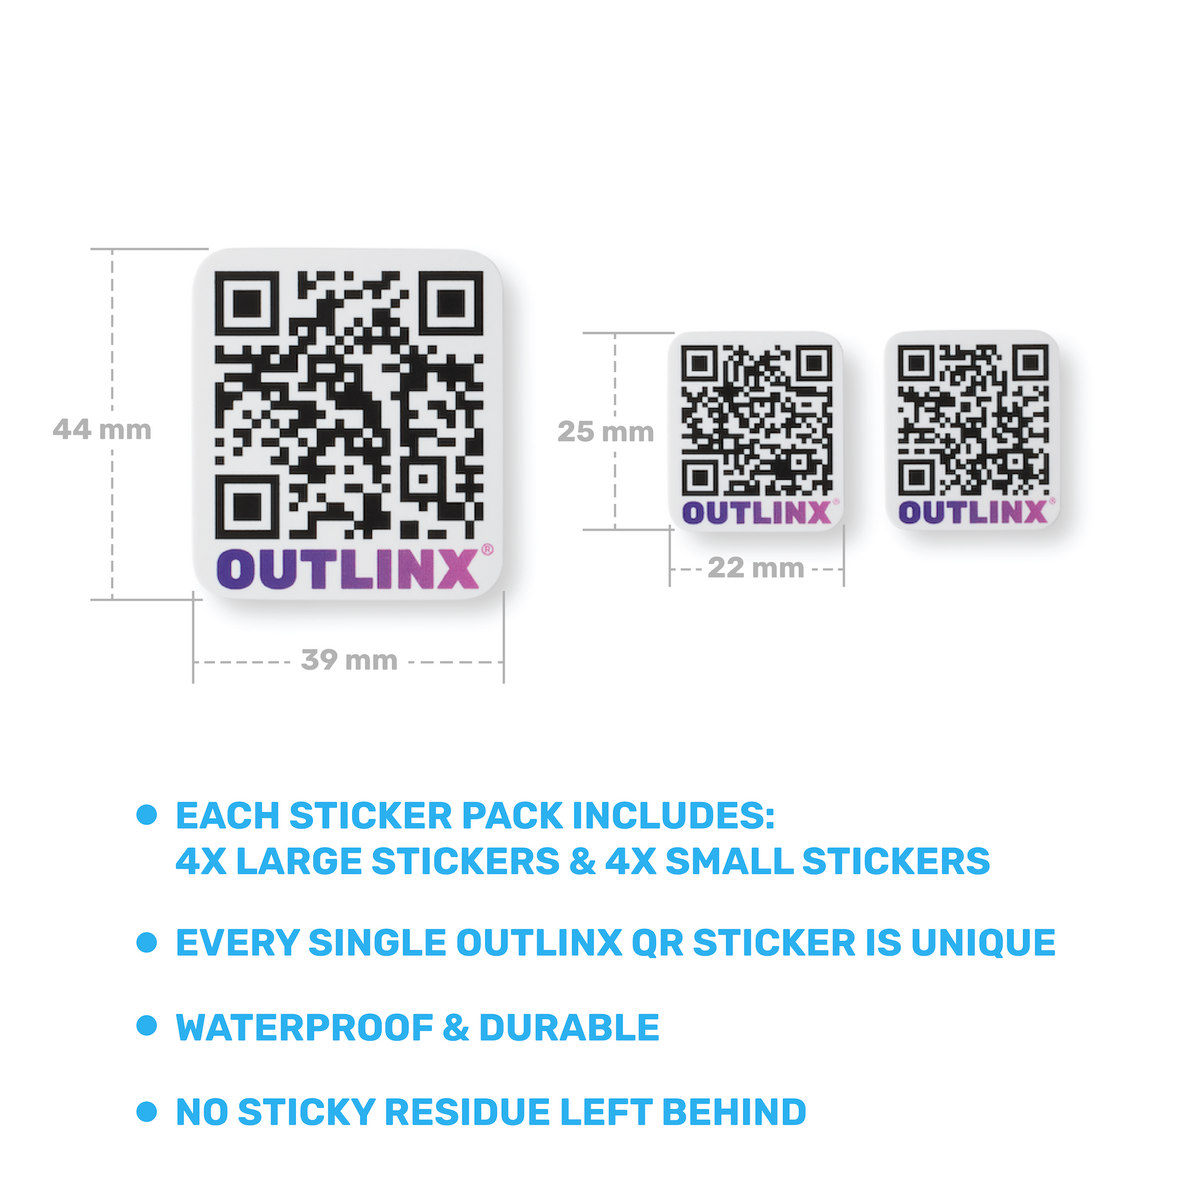 Outlinx The Original QR Smart Sticker Pack, 8 stickers